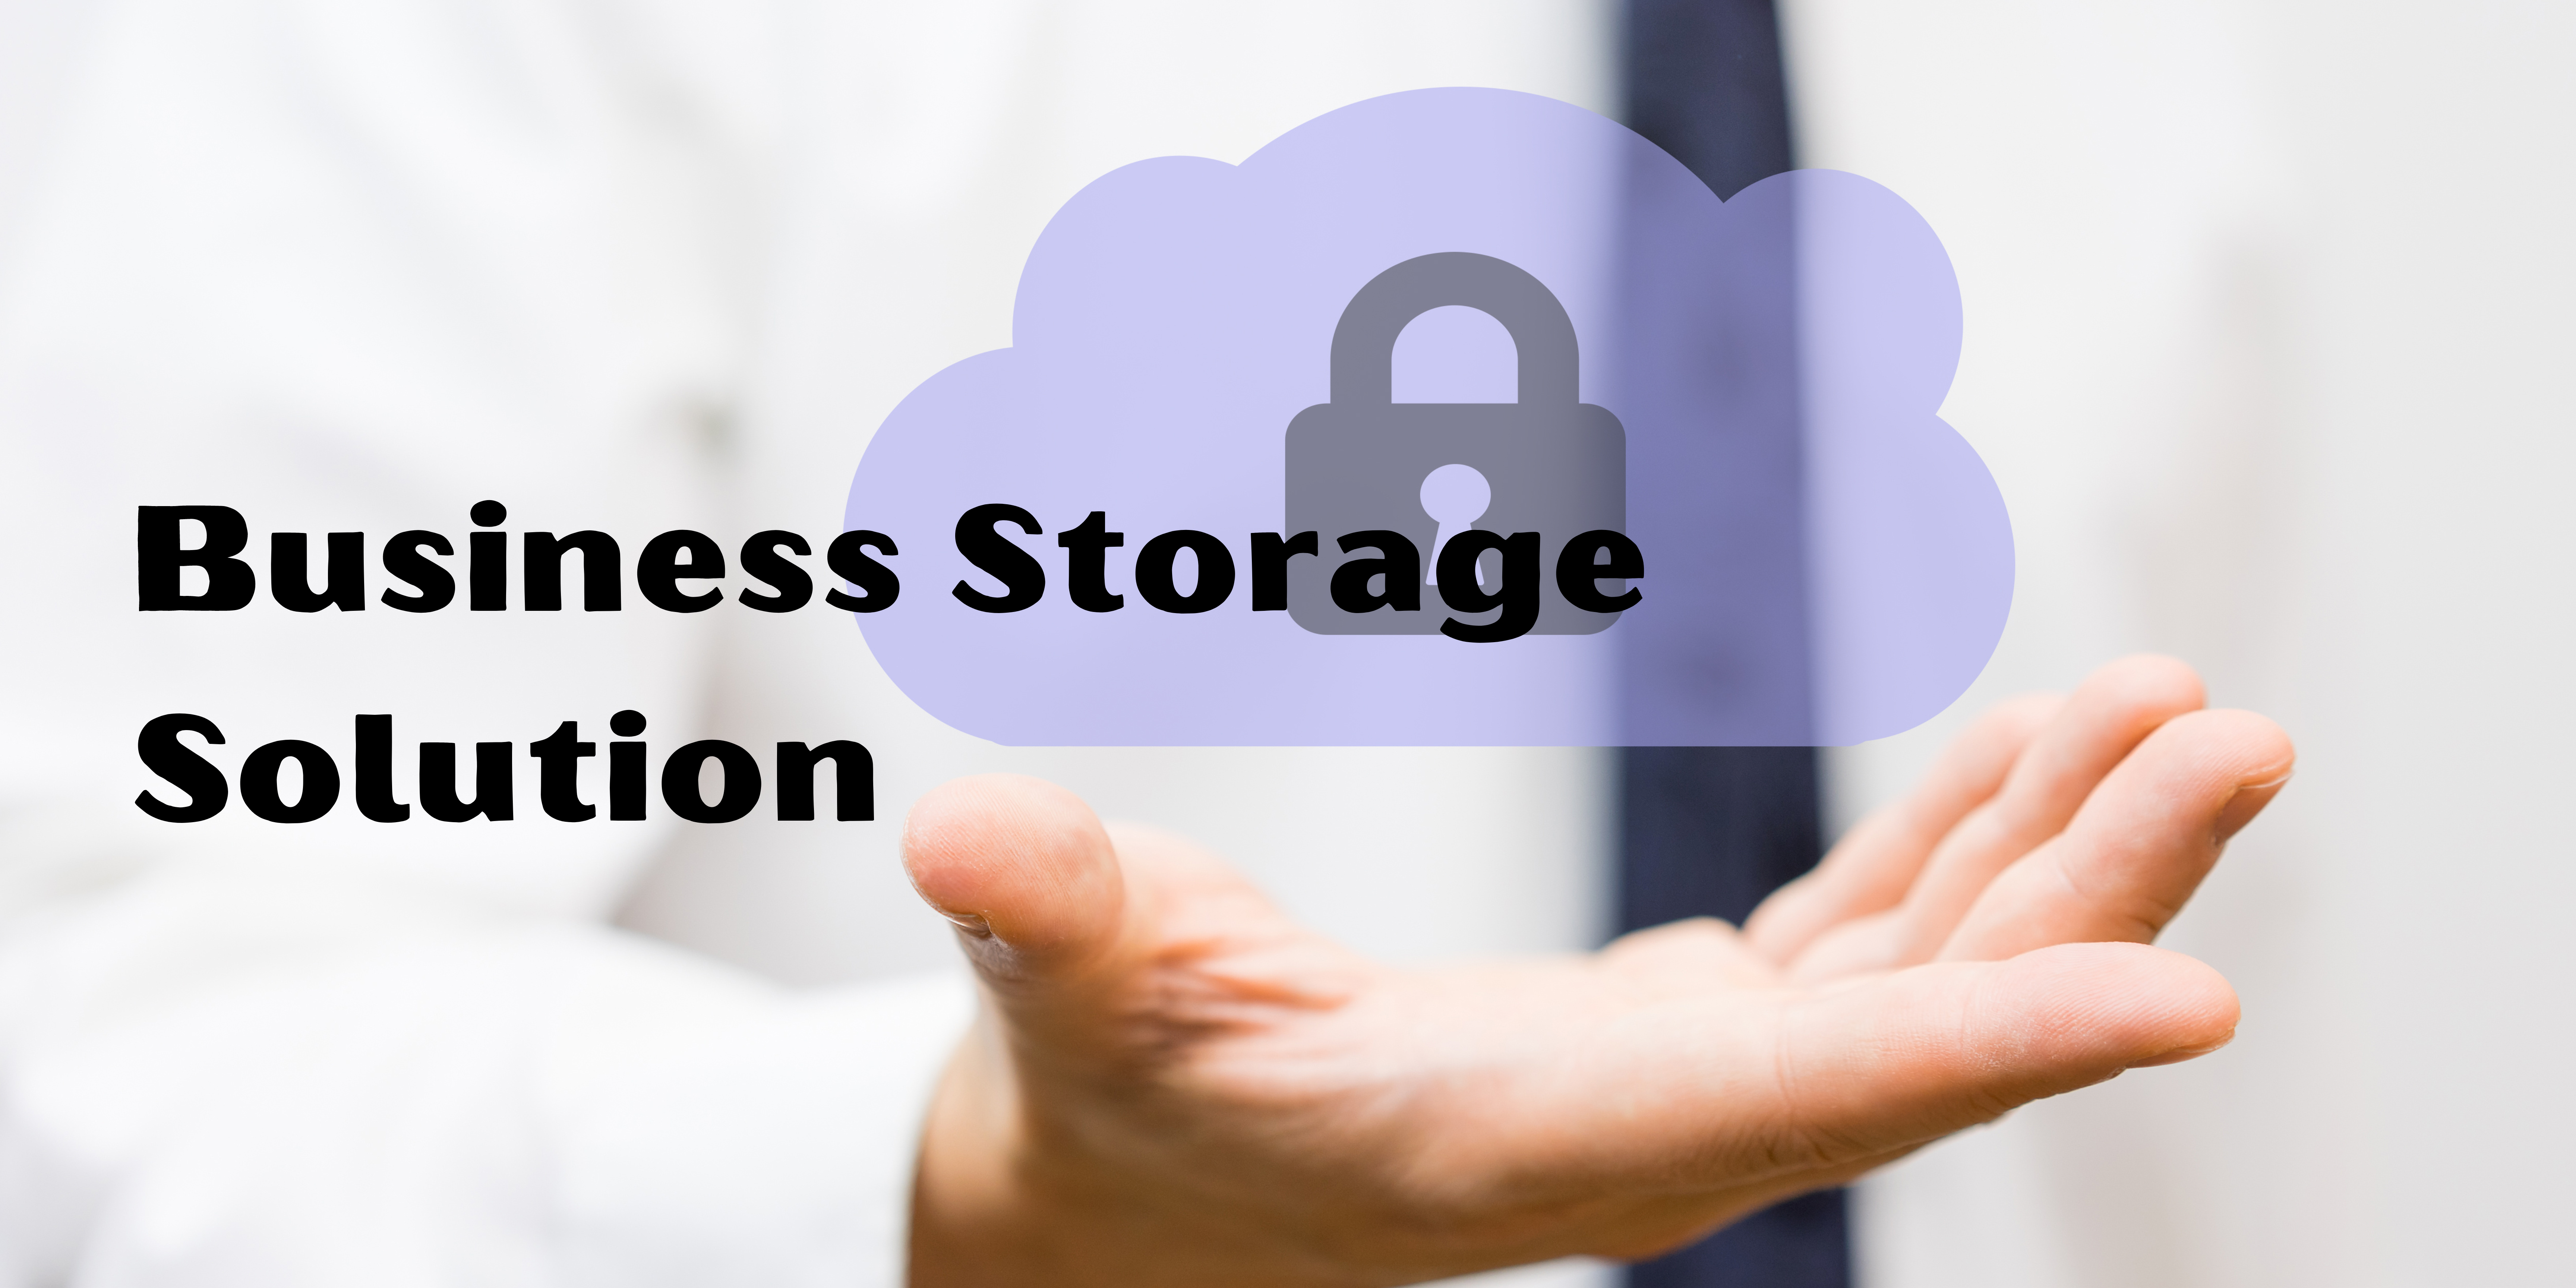 Business Storage Solution